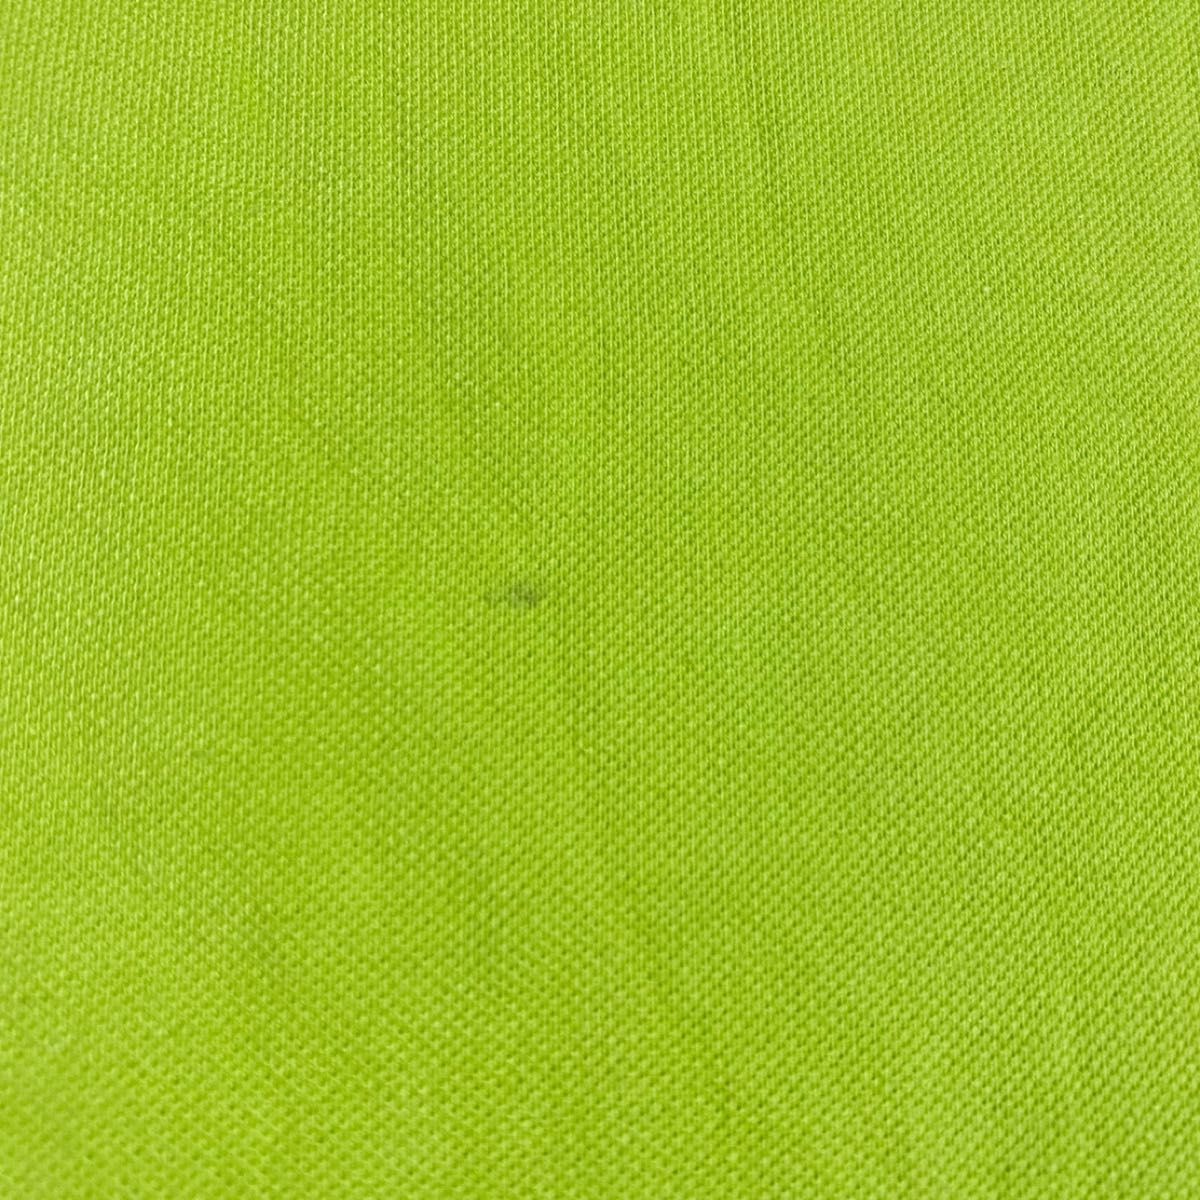 A-319★LACOSTE ラコステ★ライトグリーン黄緑色 ワニロゴ刺繍 半袖 鹿の子 ポロシャツ M相当